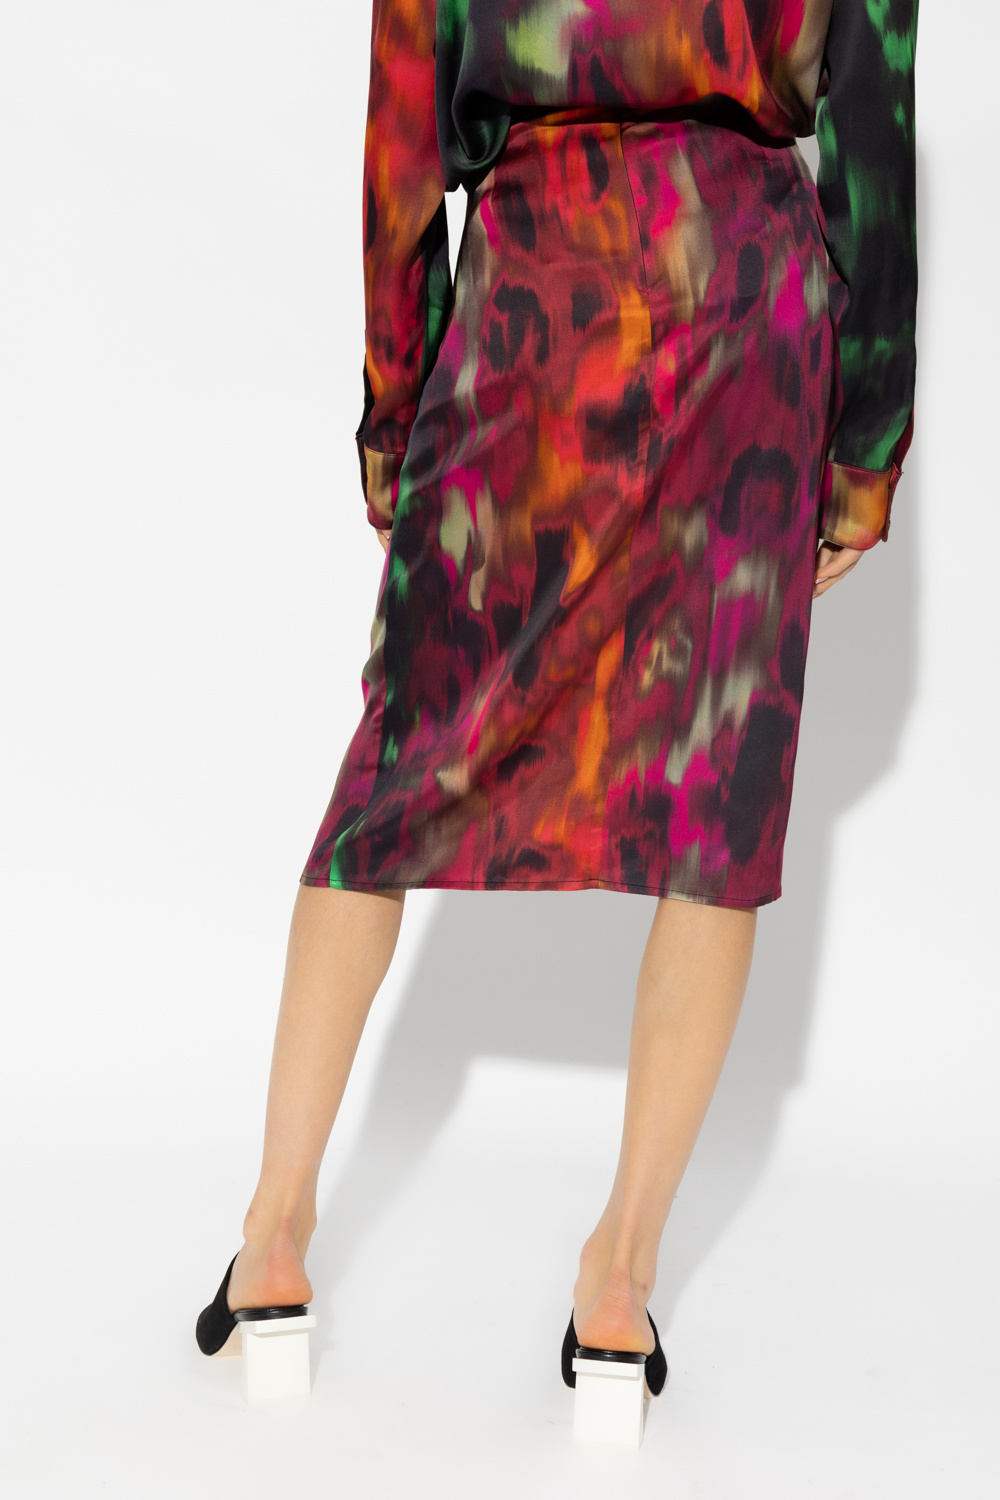 Birgitte Herskind ‘Erin’ patterned skirt